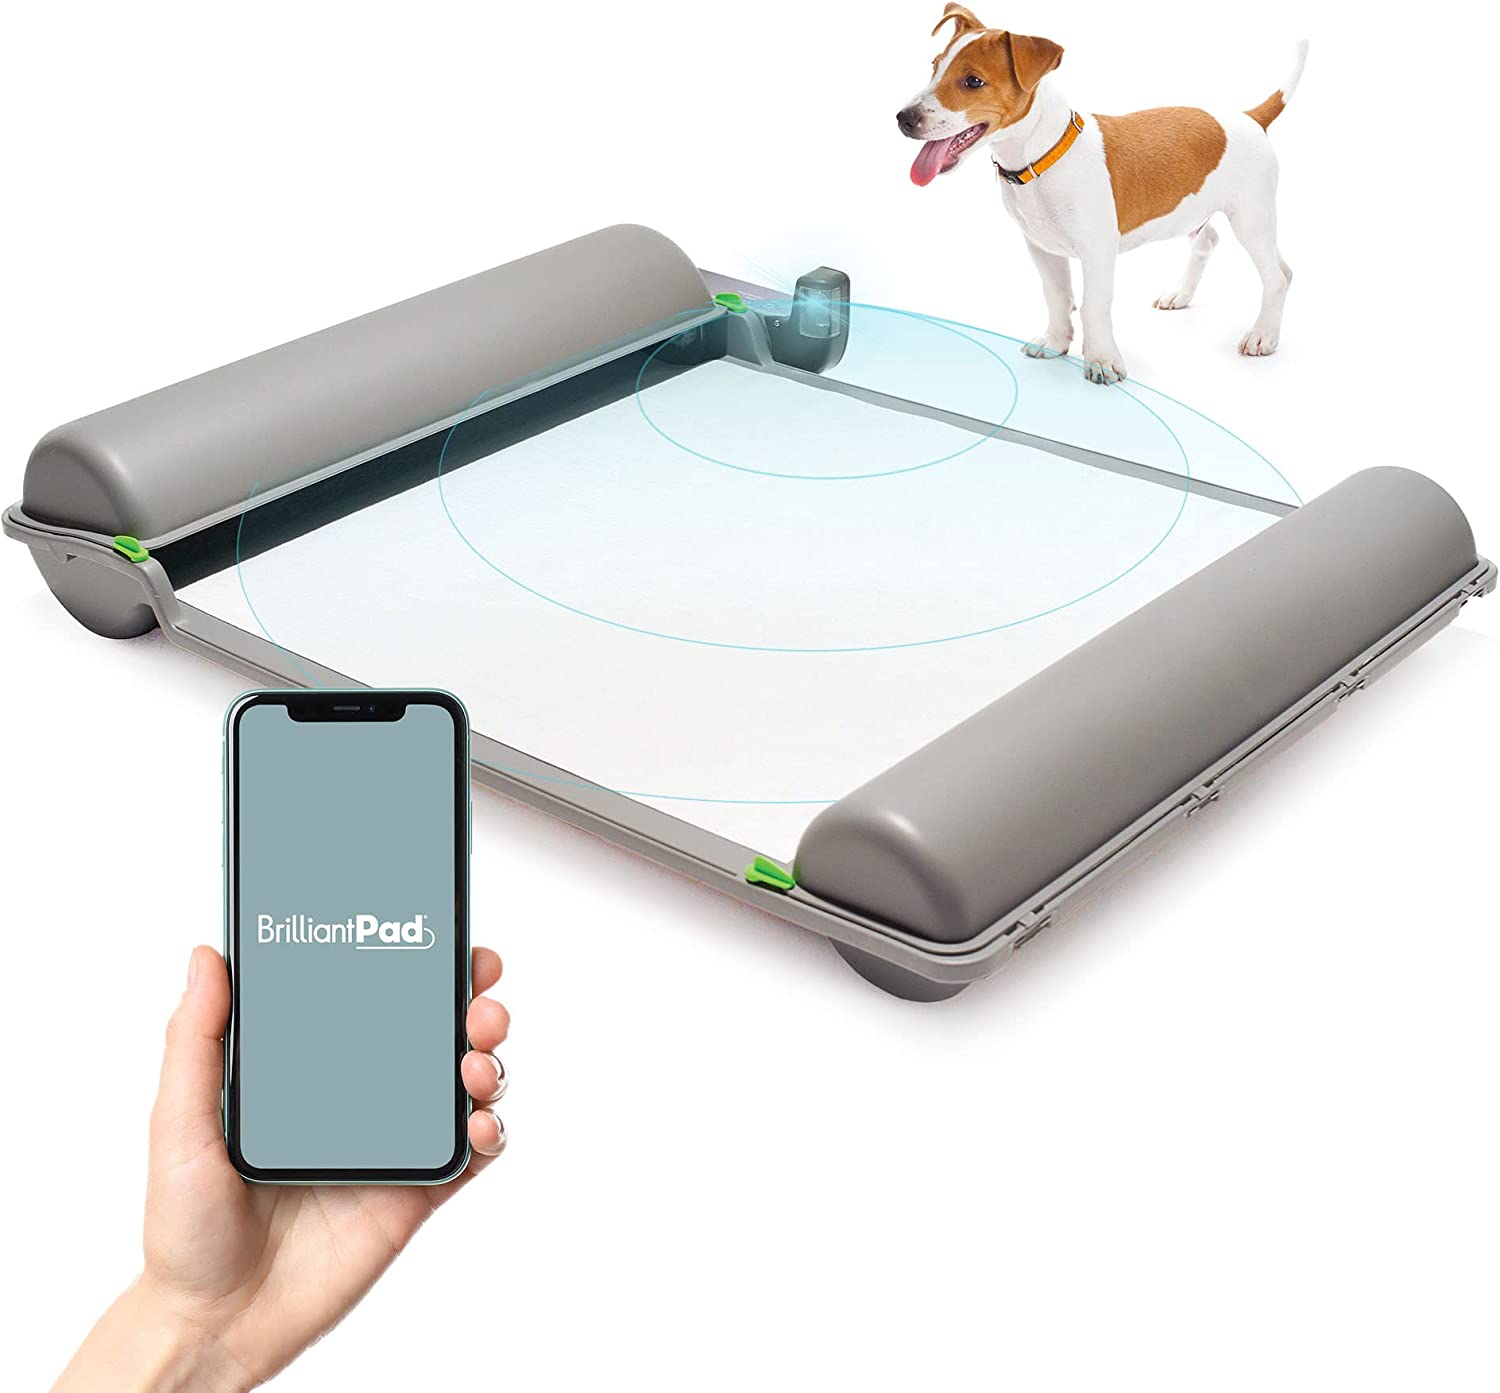 BrilliantPad Smart WiFi Enabled Indoor Dog Potty